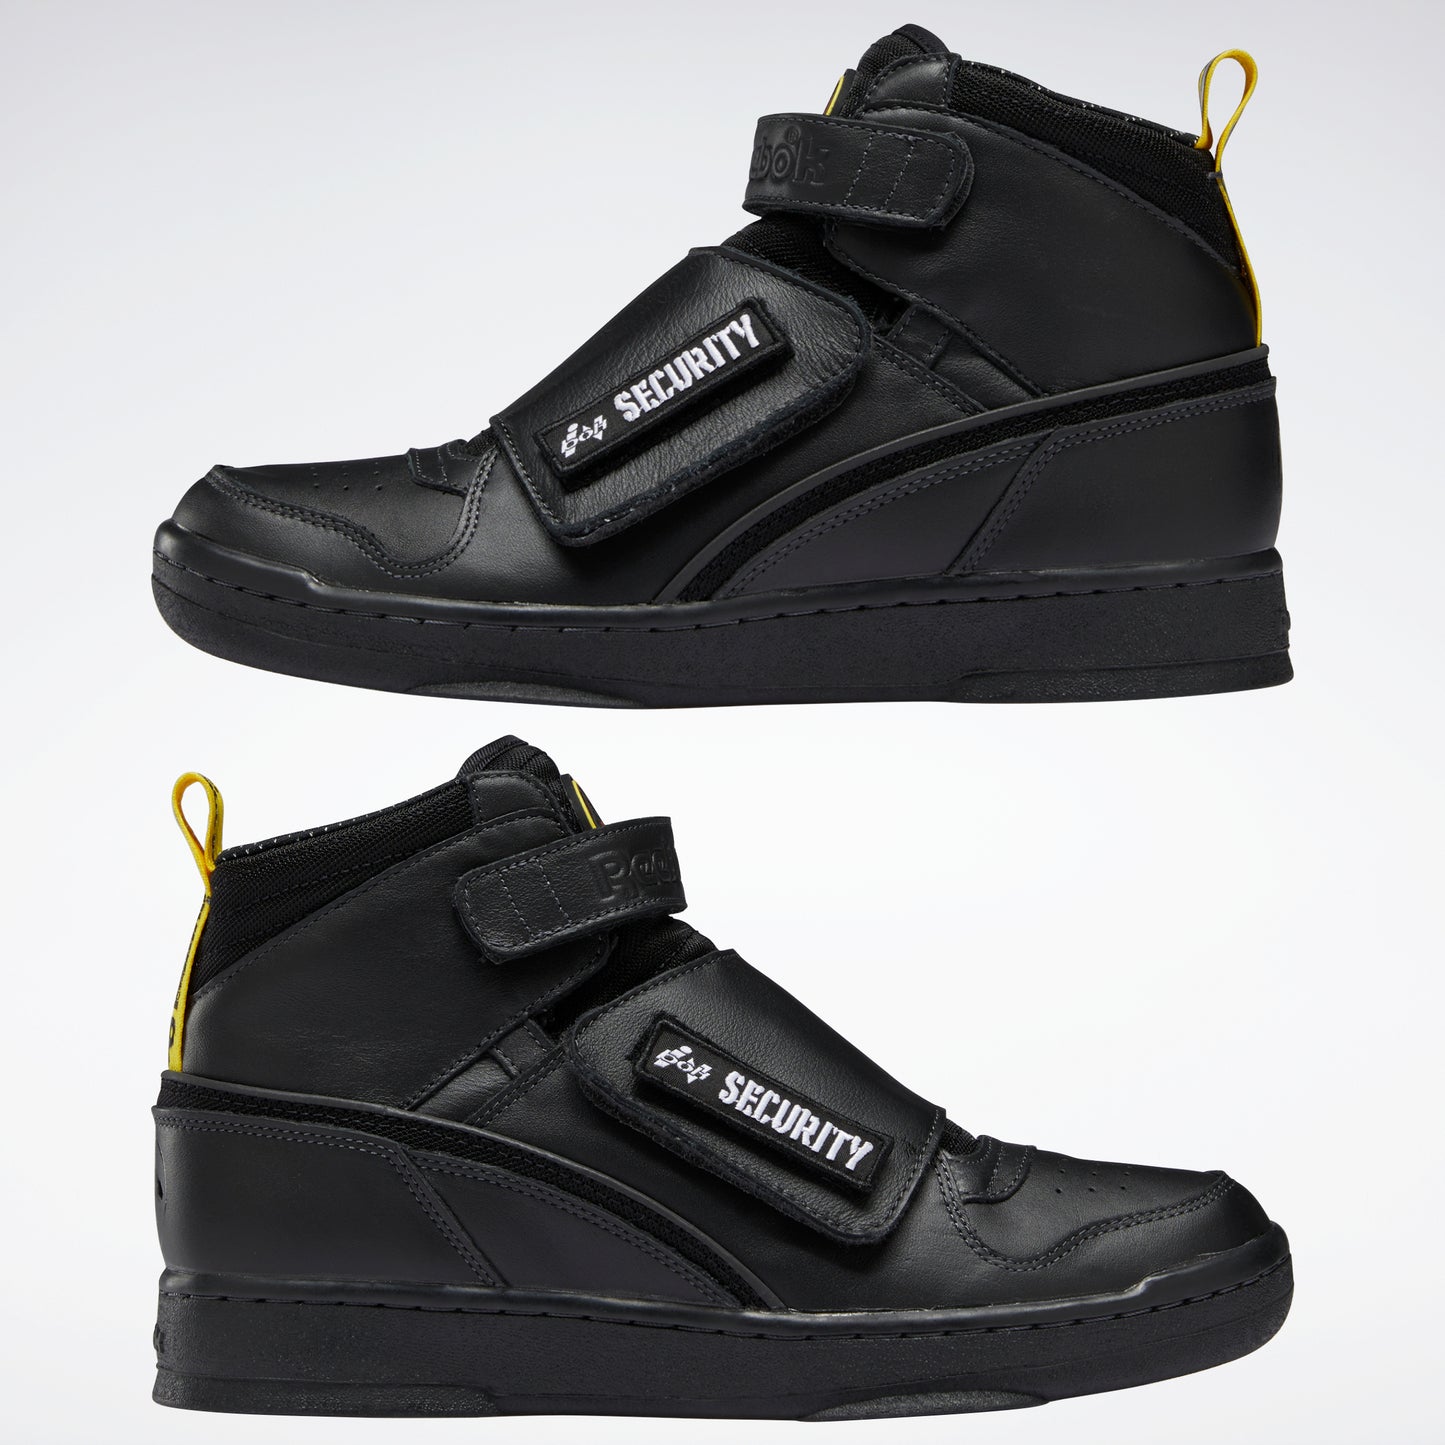 Reebok Footwear Men Jurassic Park Stomper Shoes Coal/Black/Blayel